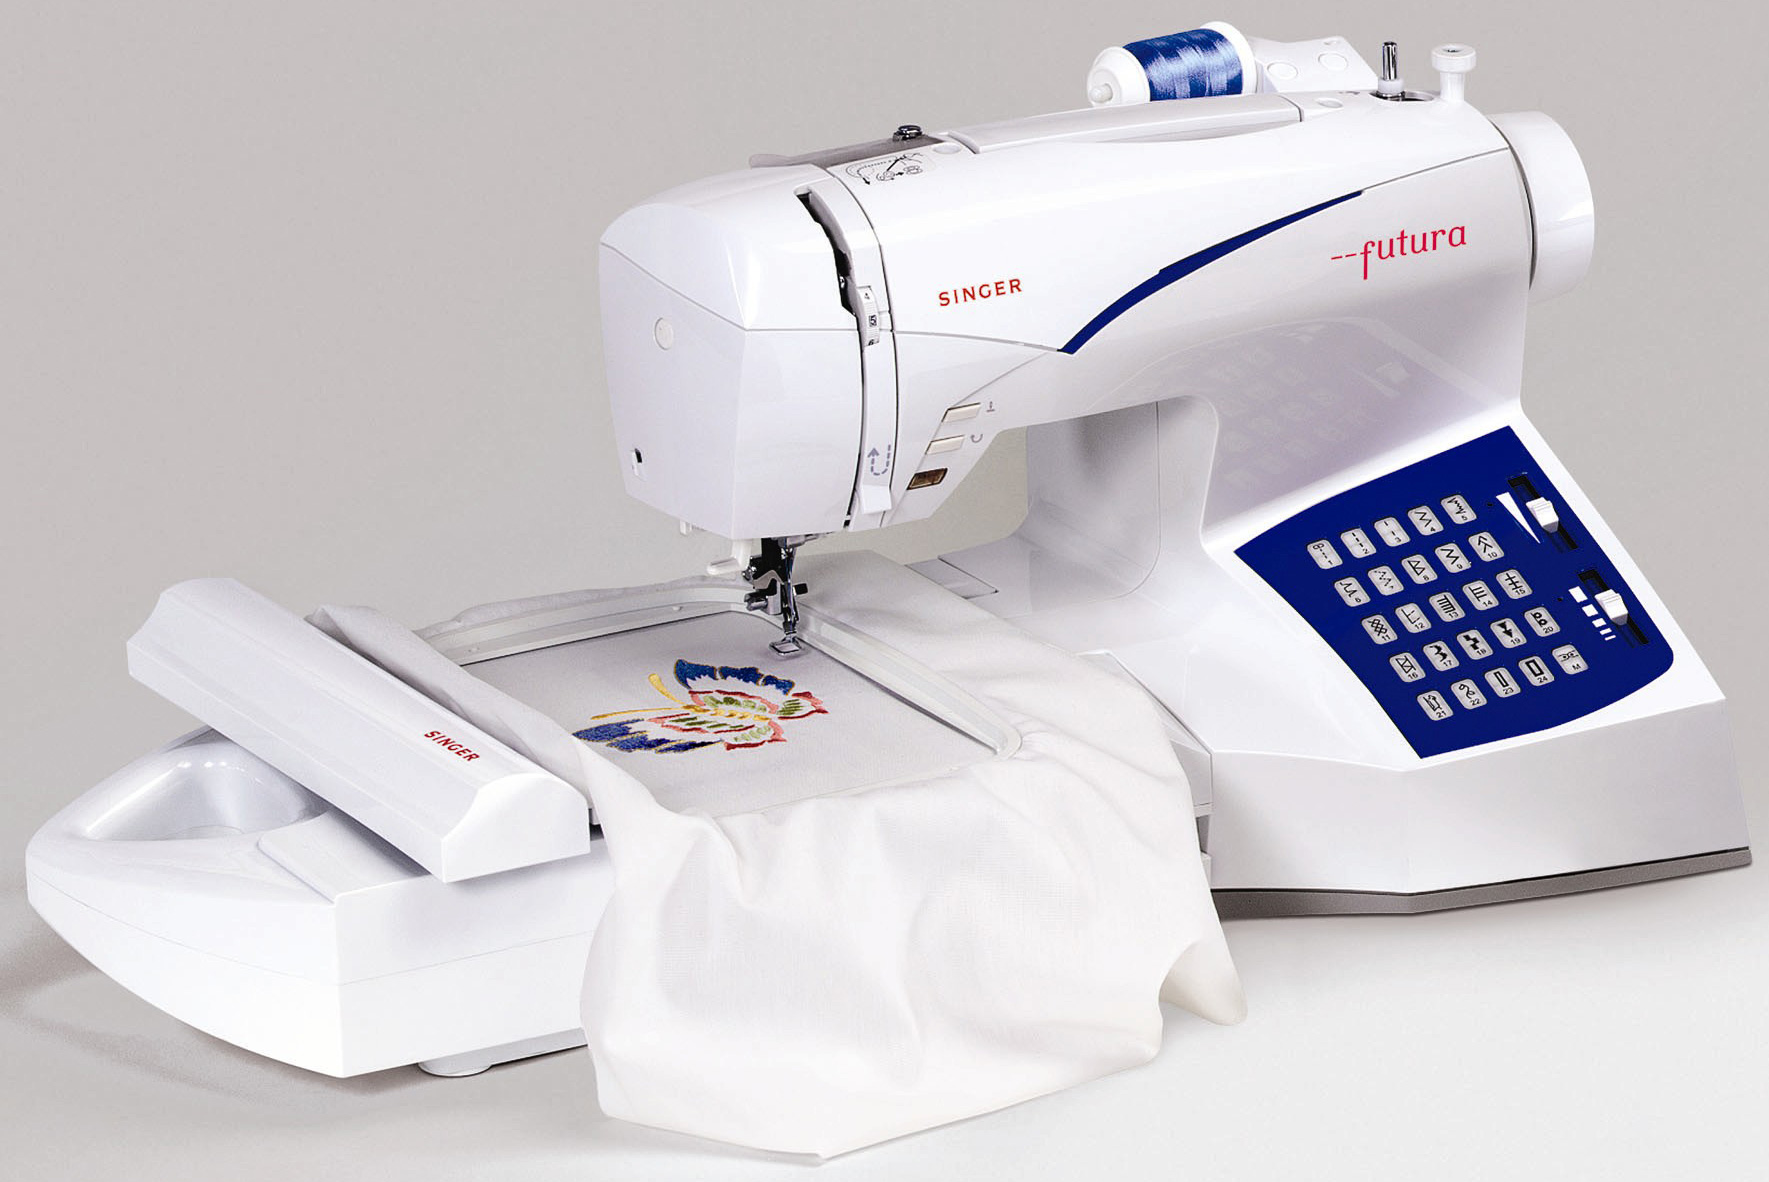 SingerВ® Futura CE-250 Embroidery and Sewing Machine, Stock